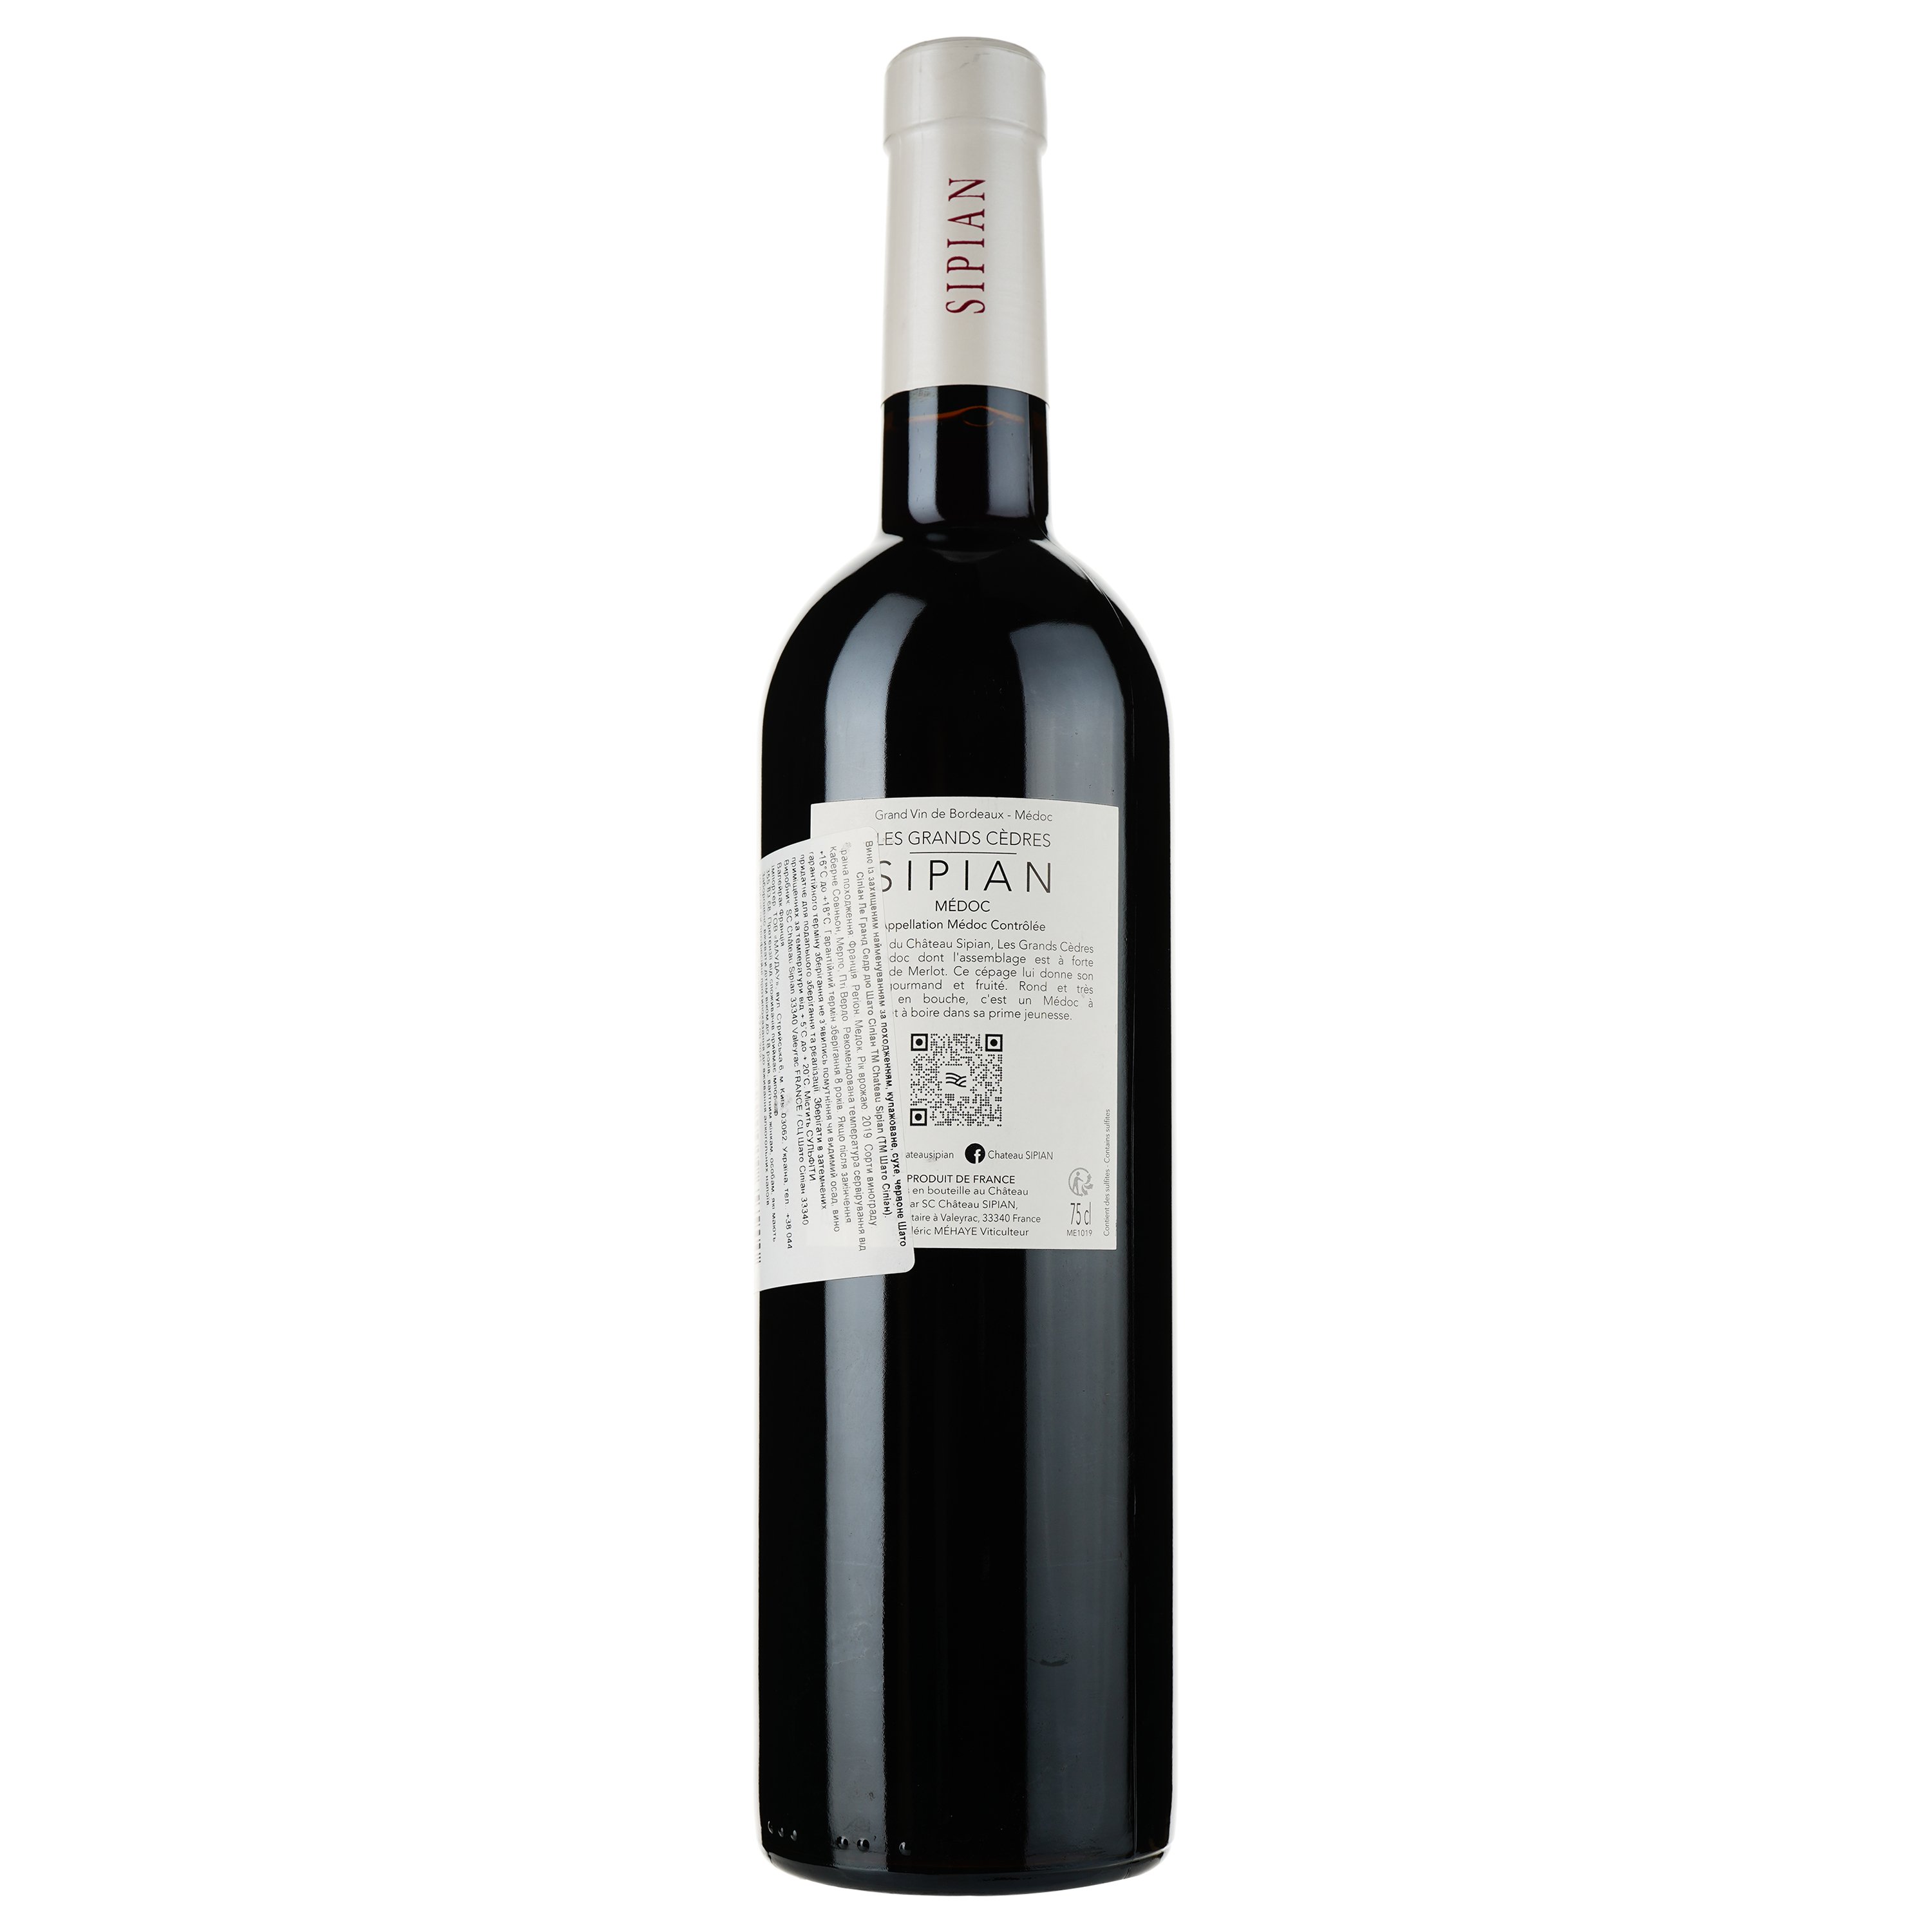 Вино Les Grands Cedres du Chateau Sipian AOP Medoc 2019 красное сухое 0.75 л - фото 2